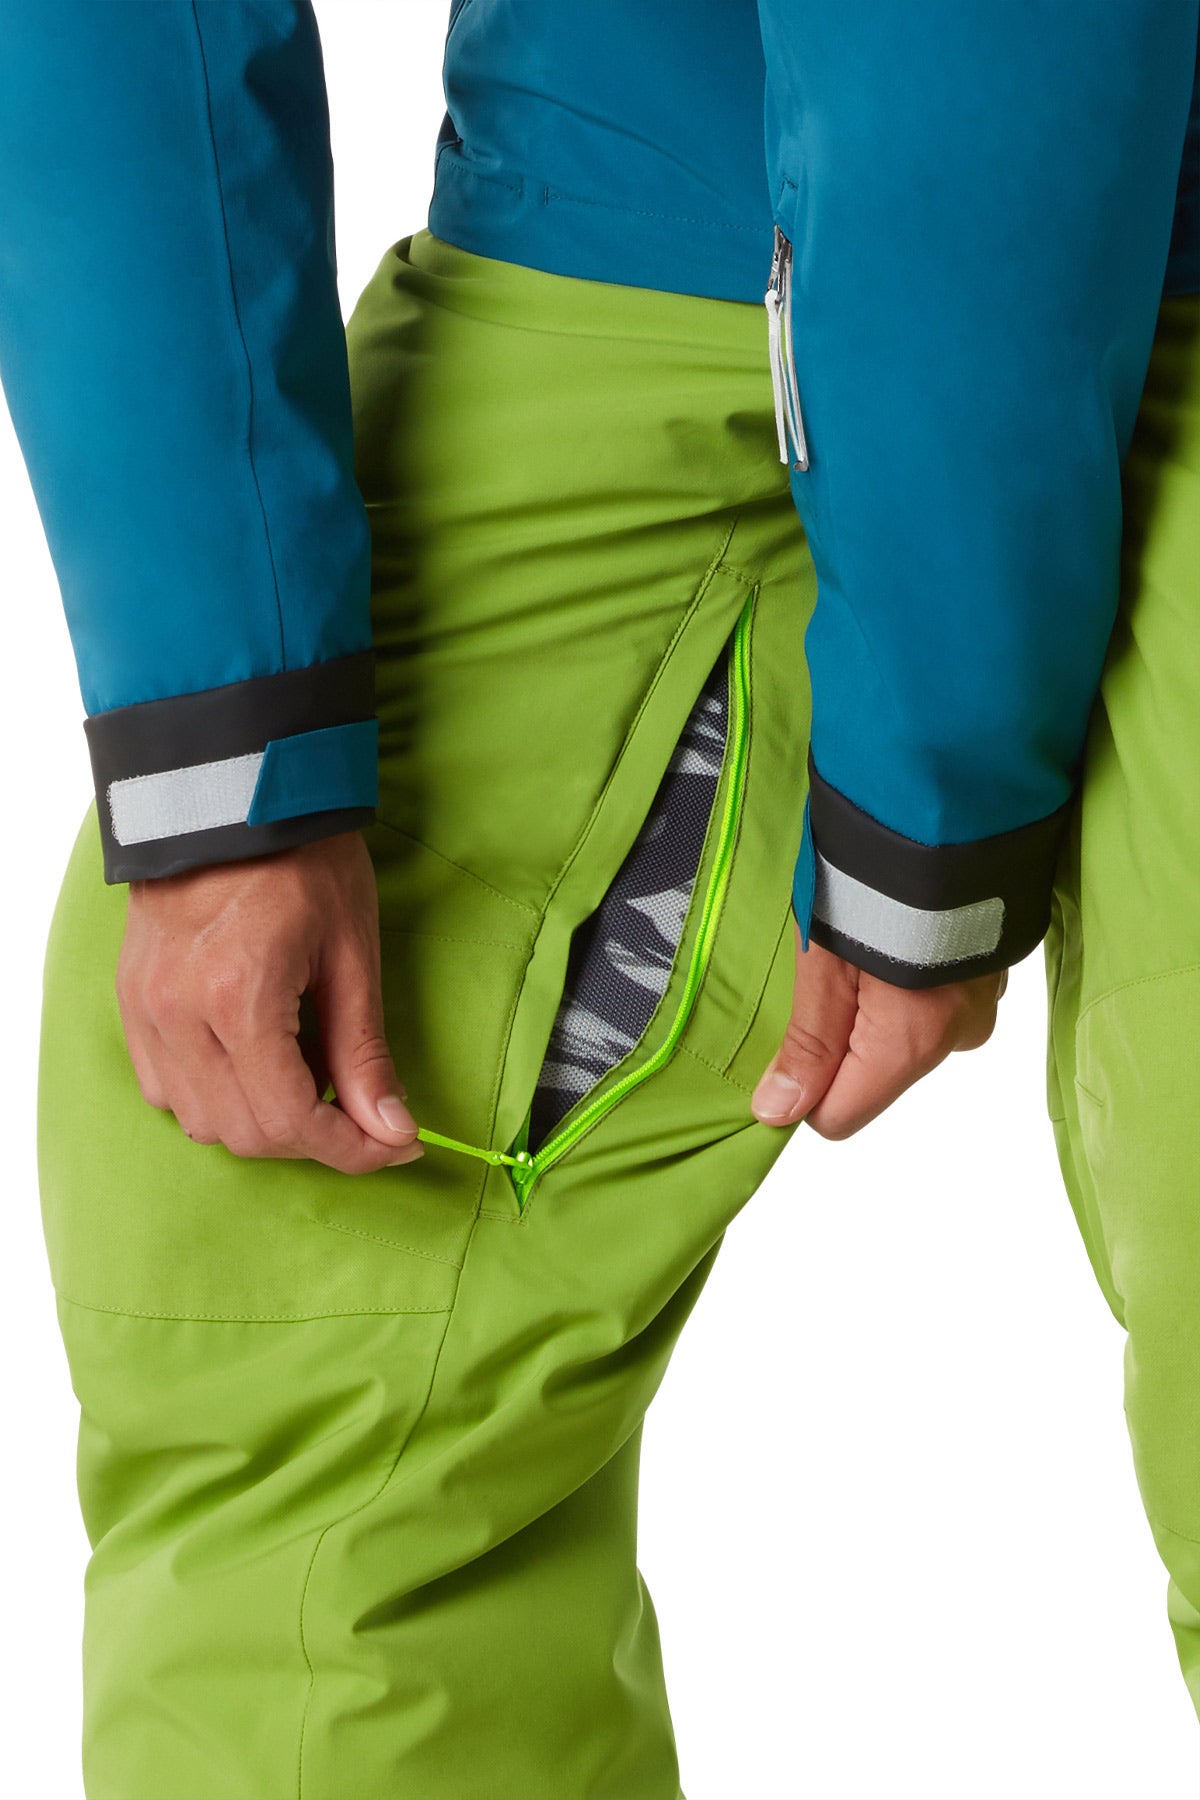 elevated bib pant thigh zipper vant